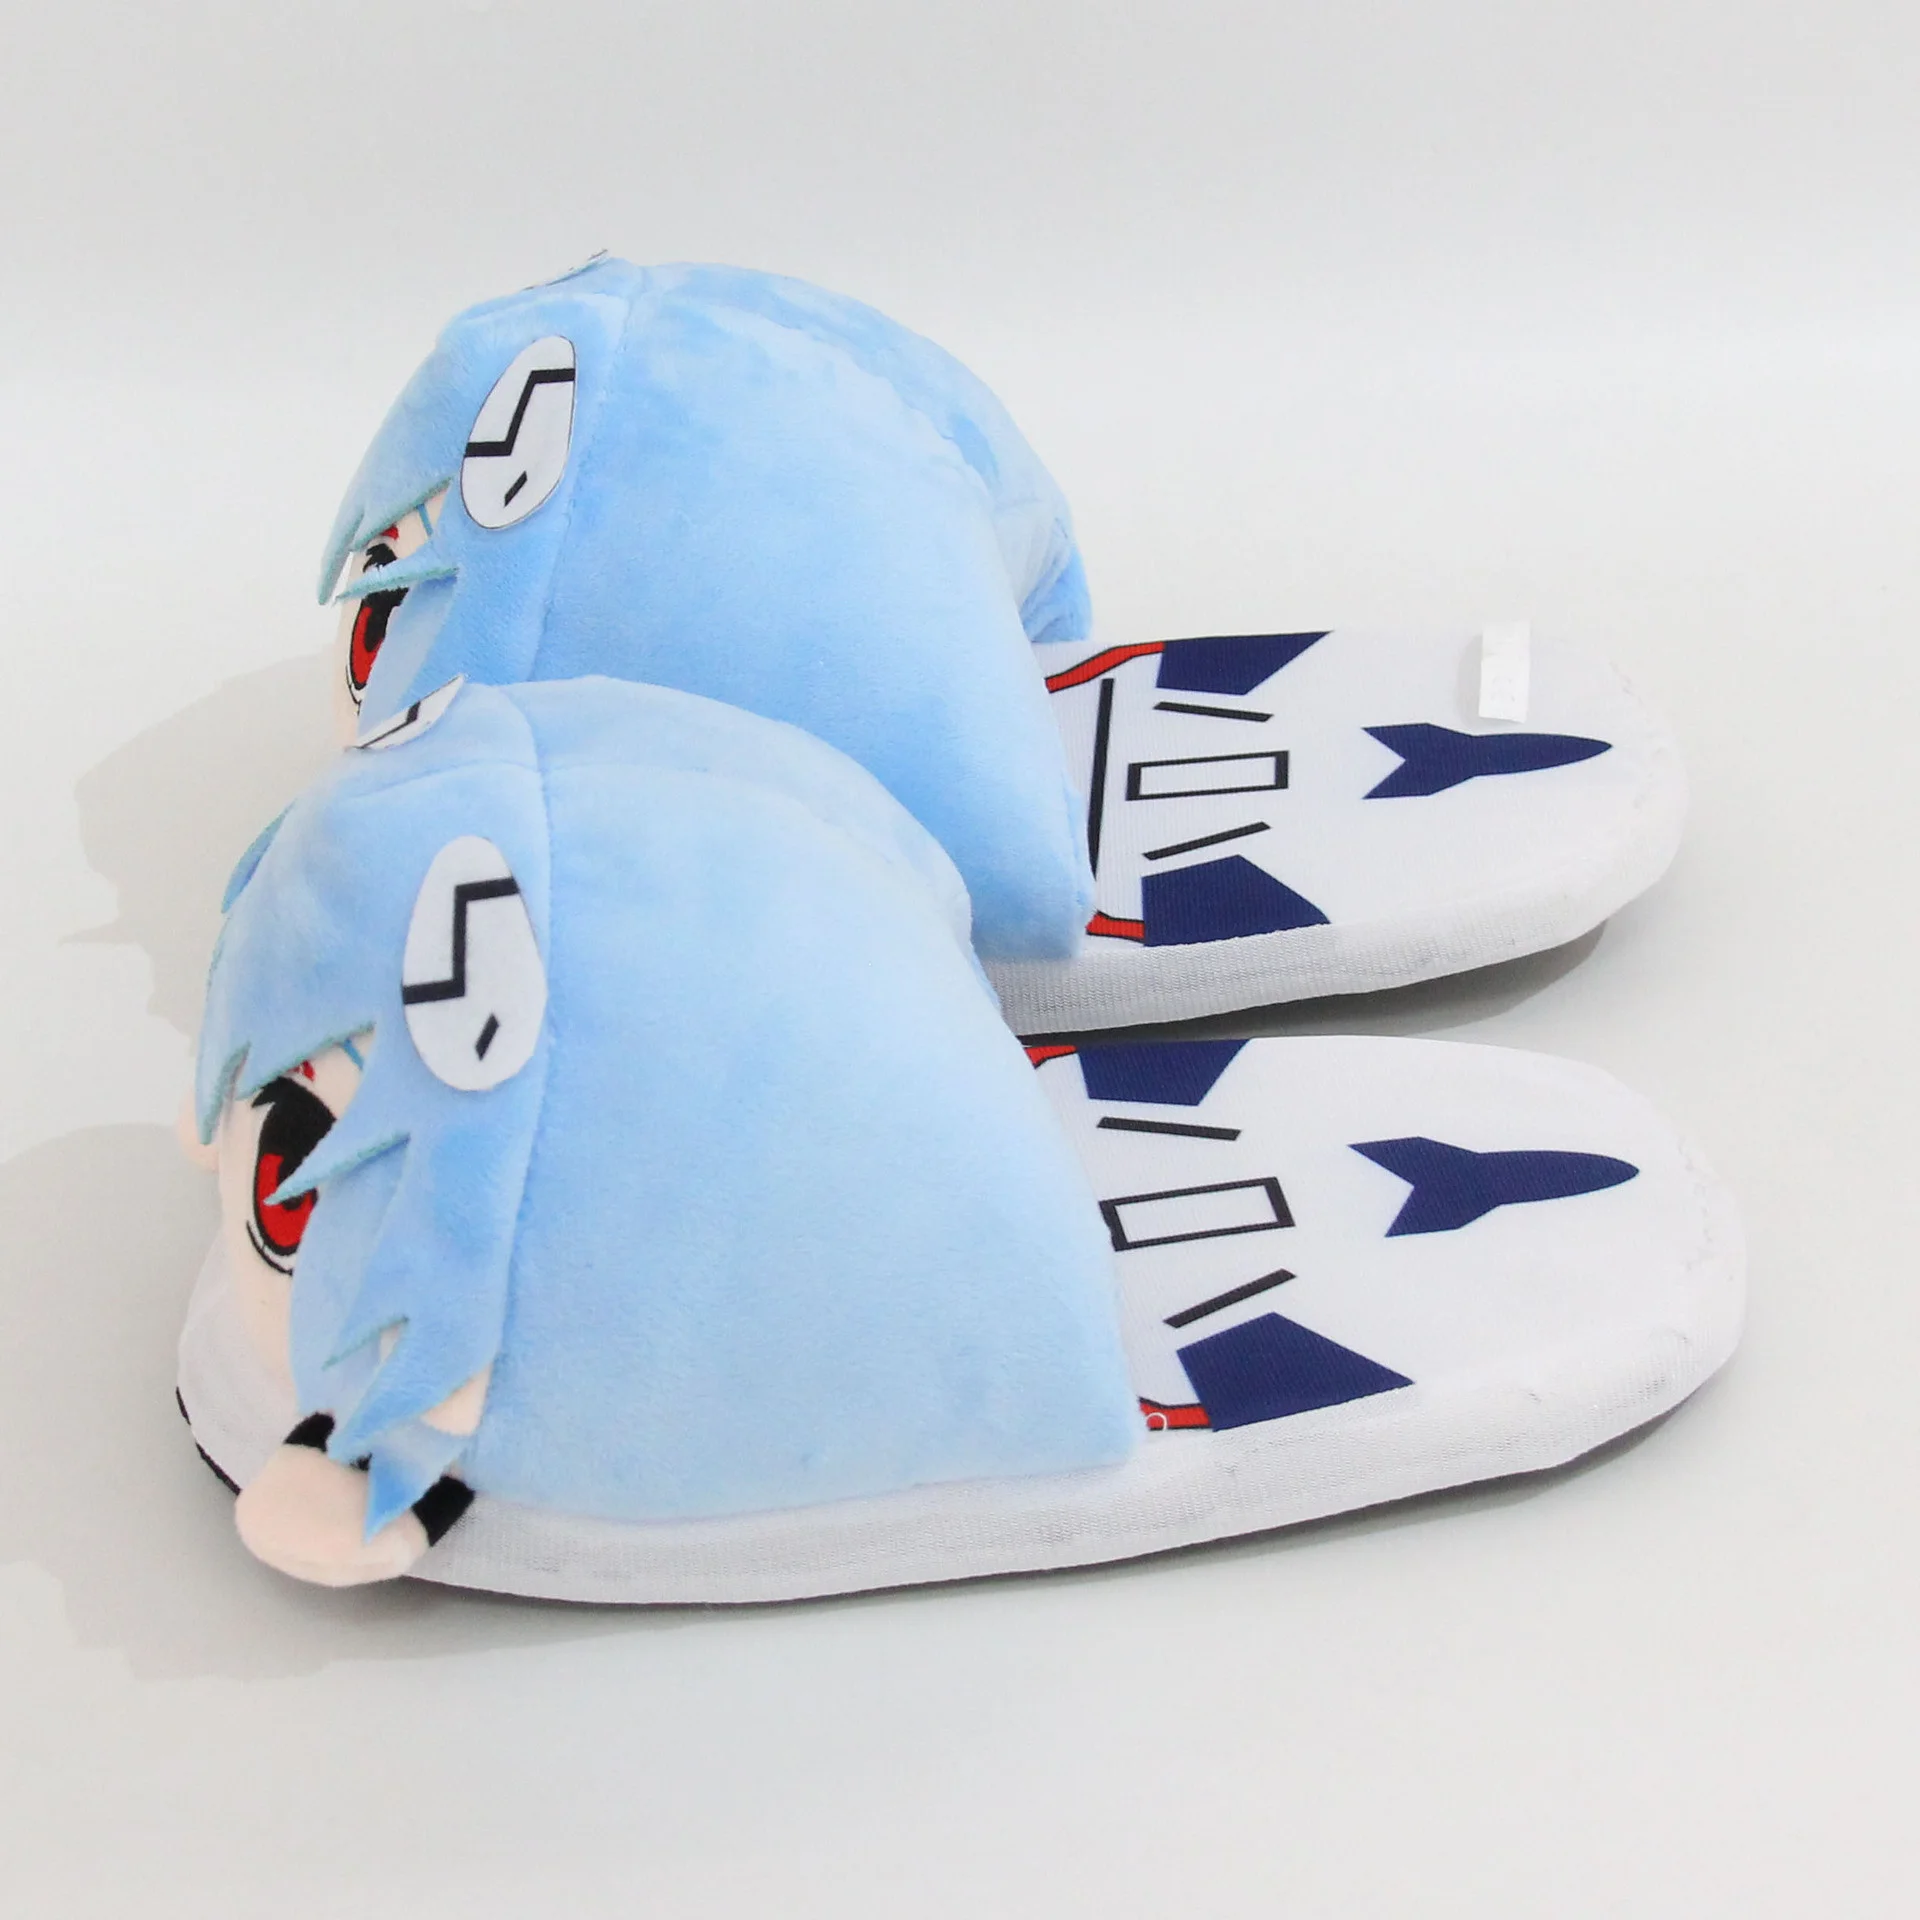 Kawaii Cartoon Rei Ayanami Soft Stuffed Plush Slippers